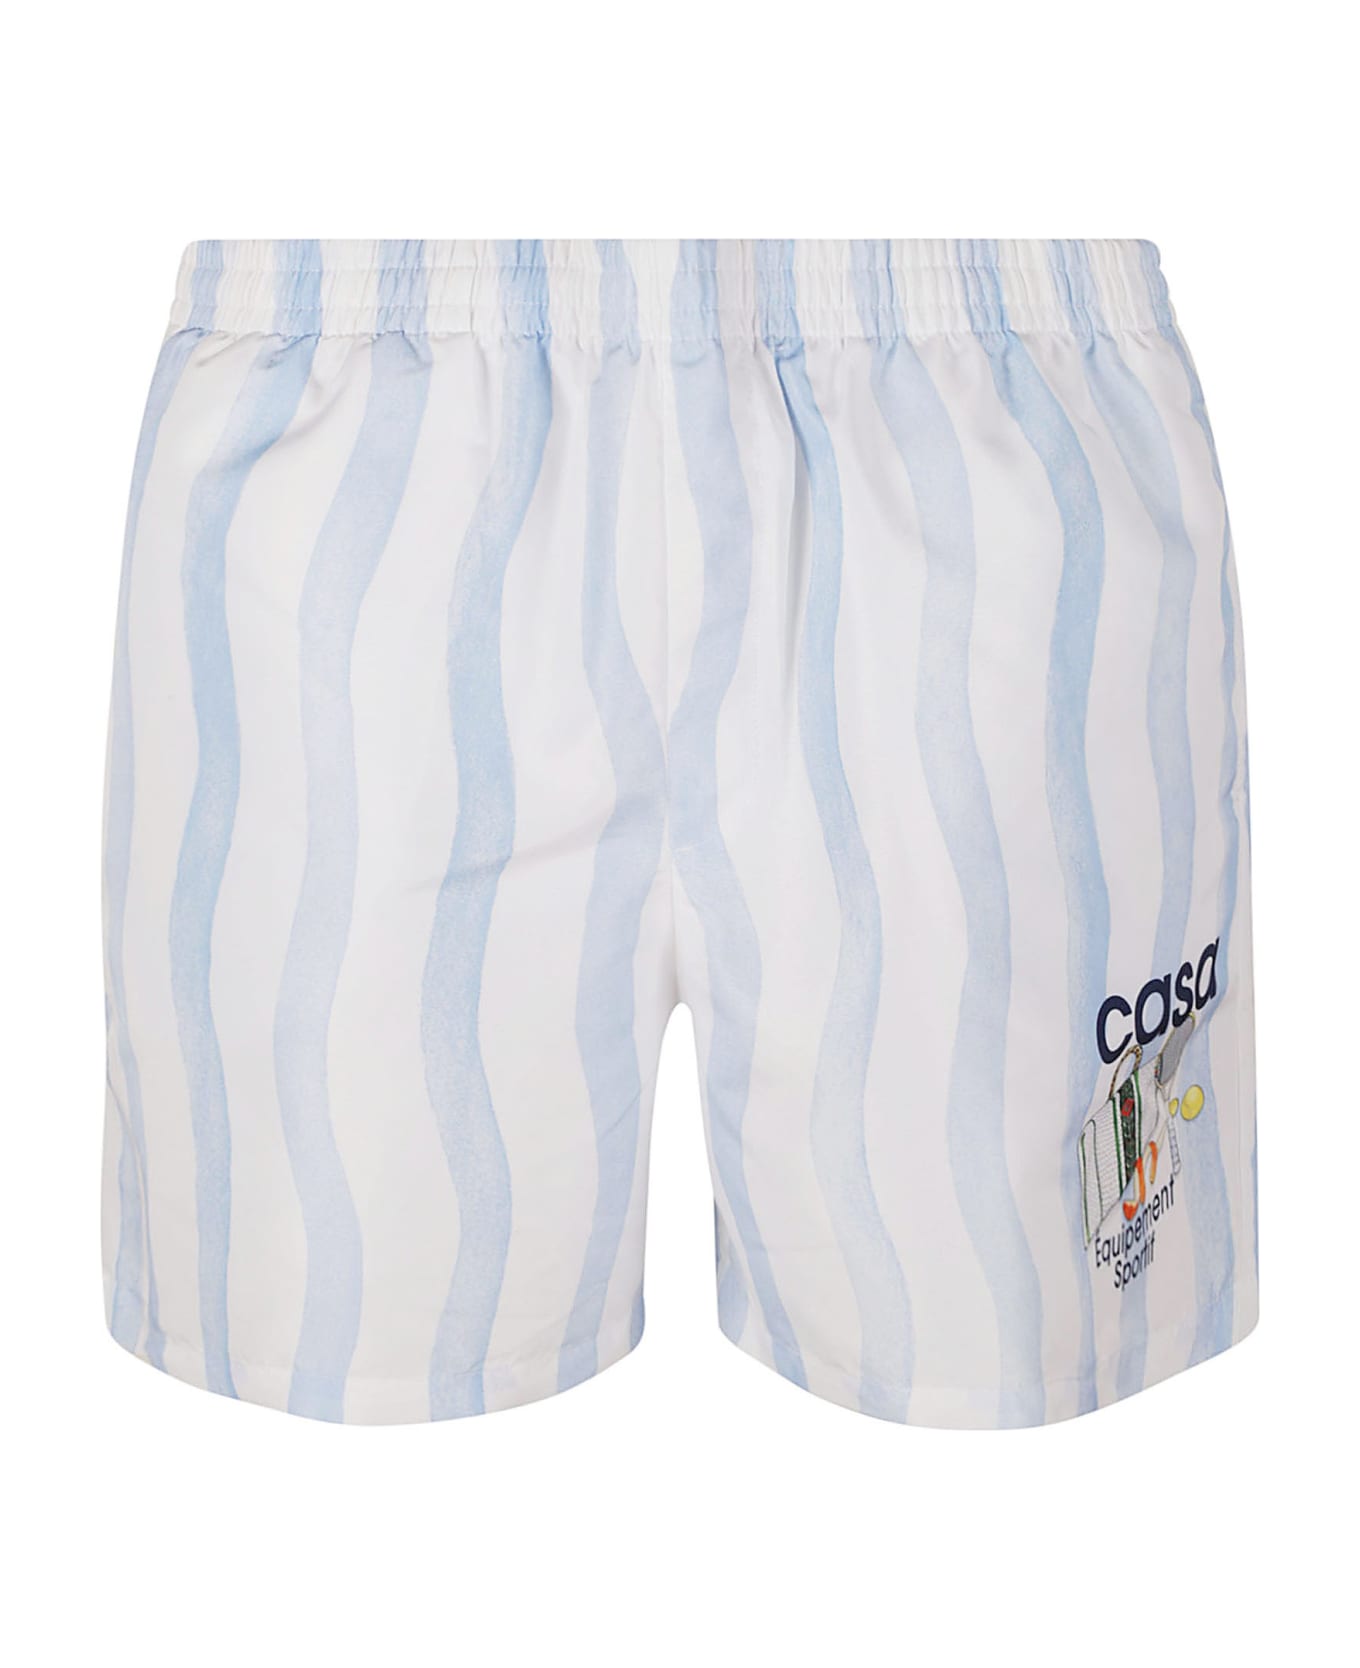 Casablanca Mens Printed Swimshorts - Blue Wave Stripe 水着